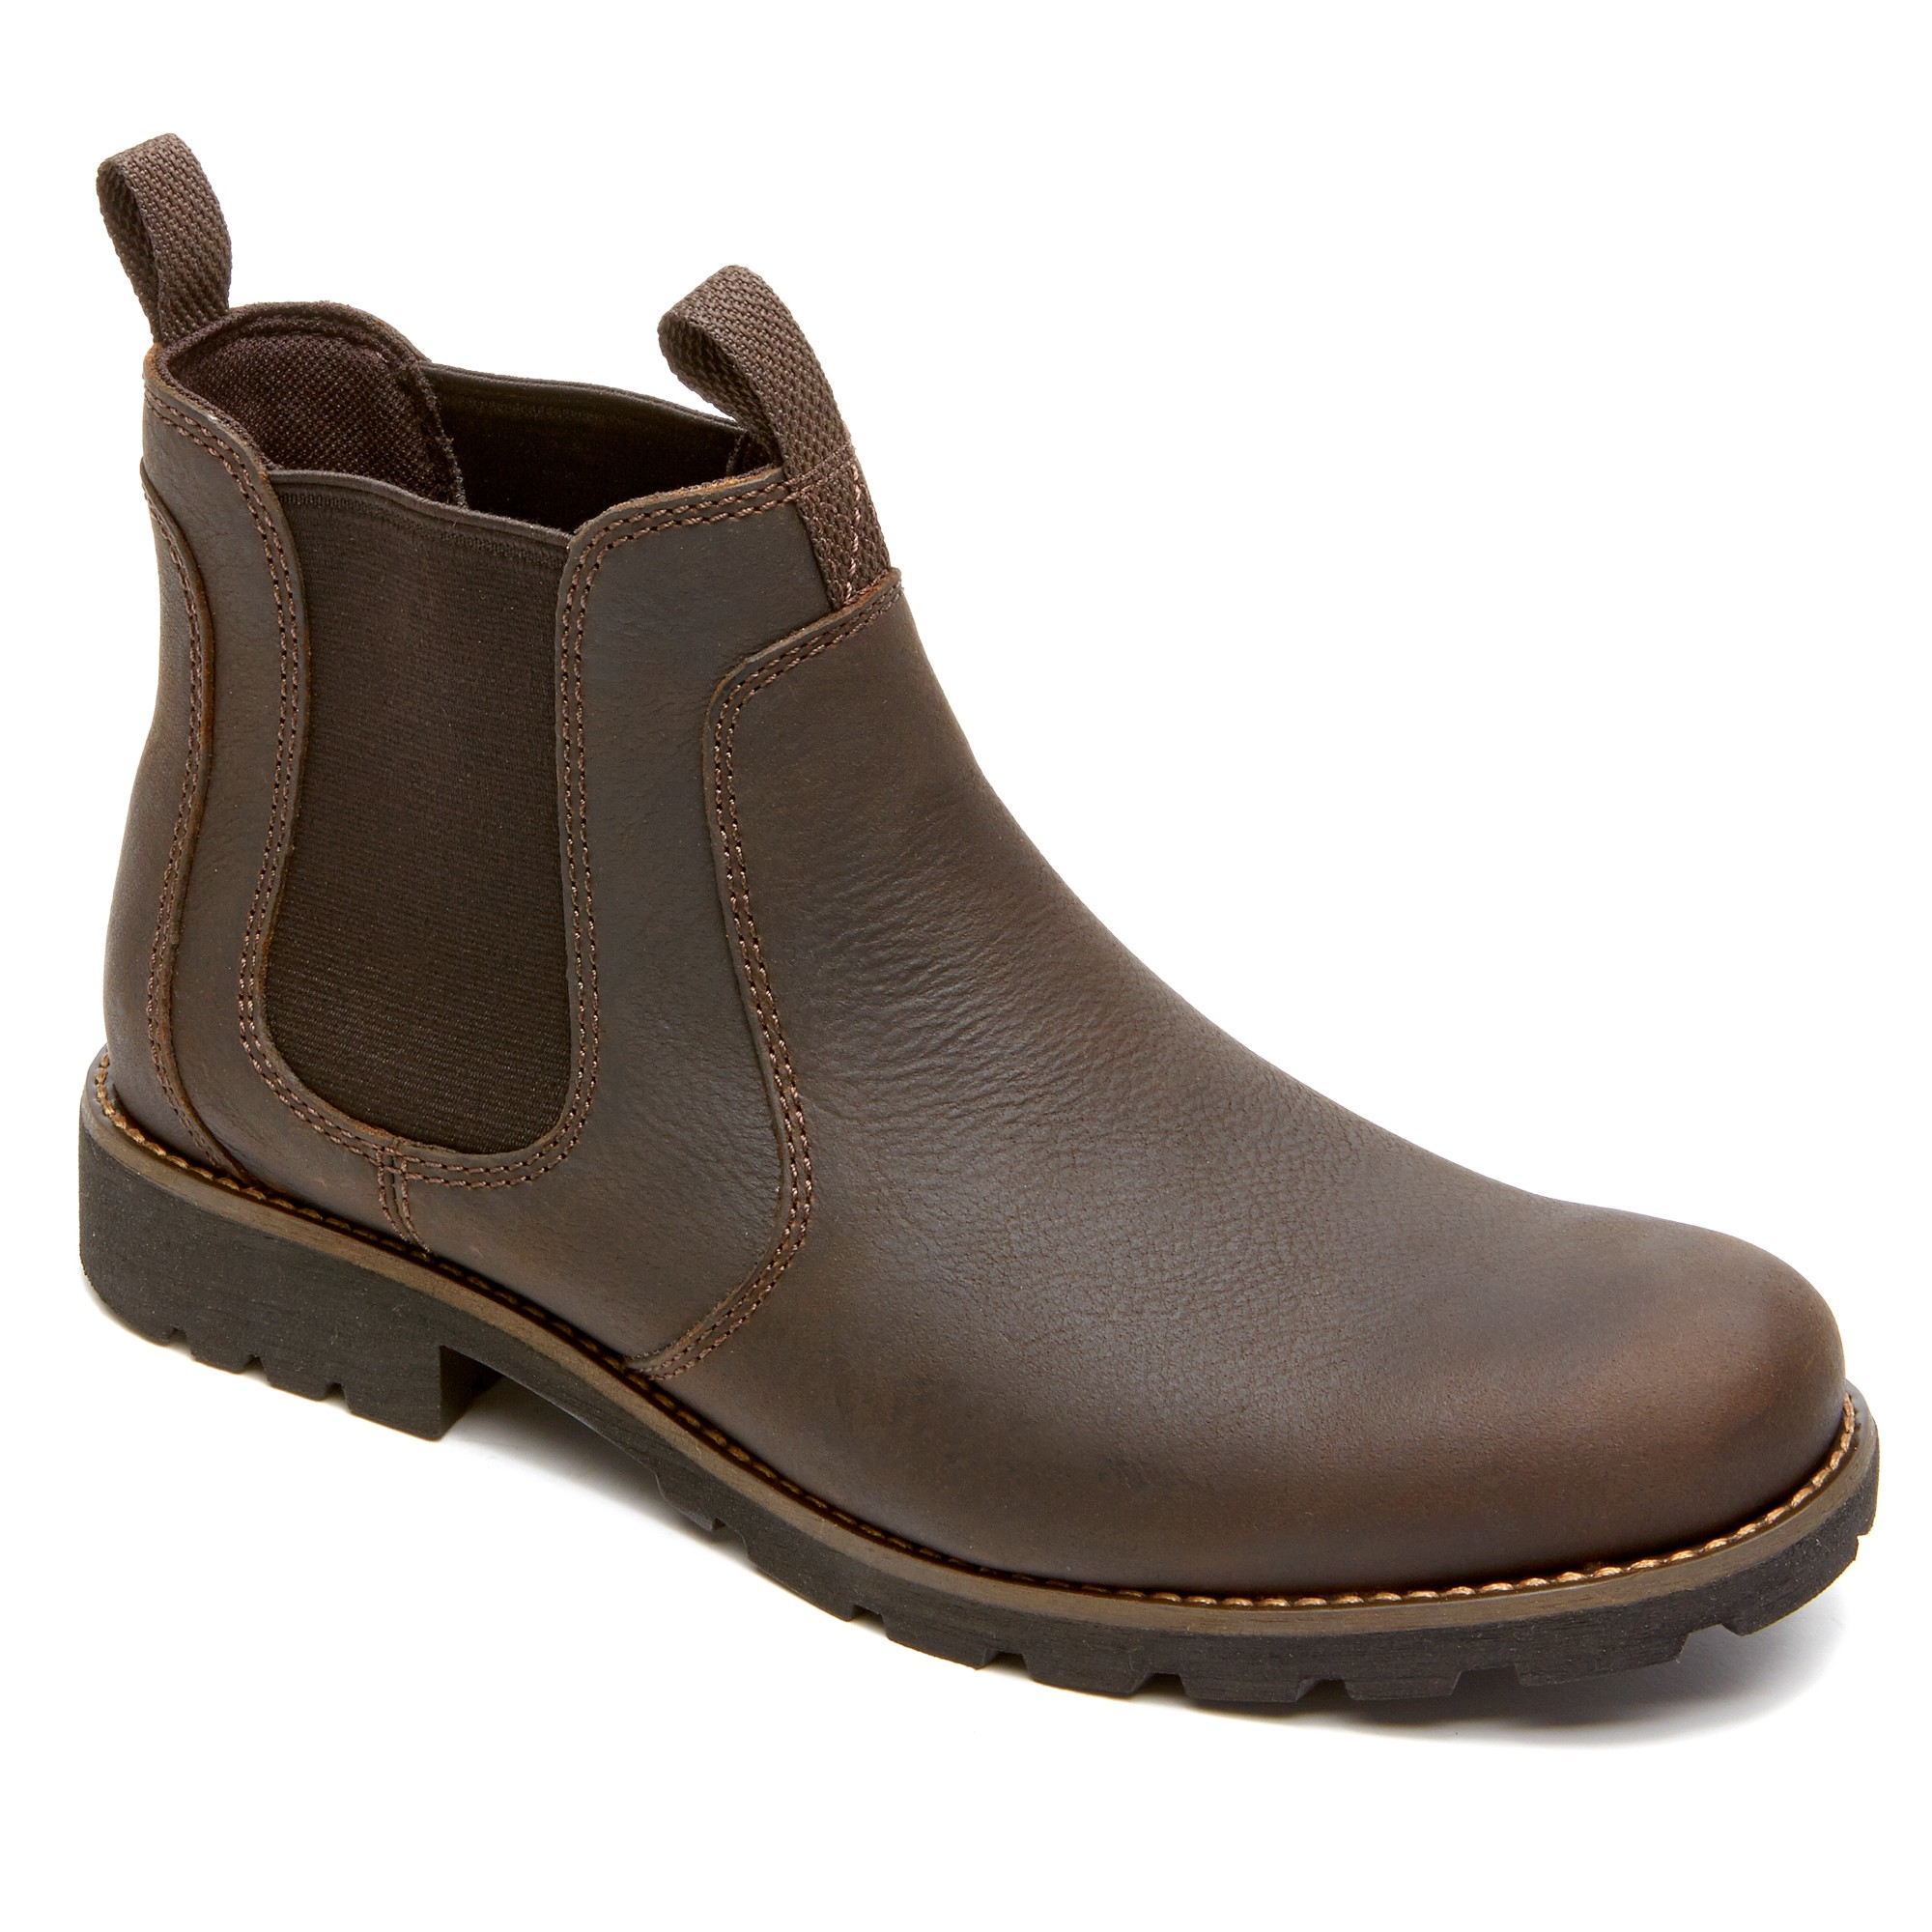 Rockport Street Escape Chelsea Boots in Dark (Brown) for Men - Lyst